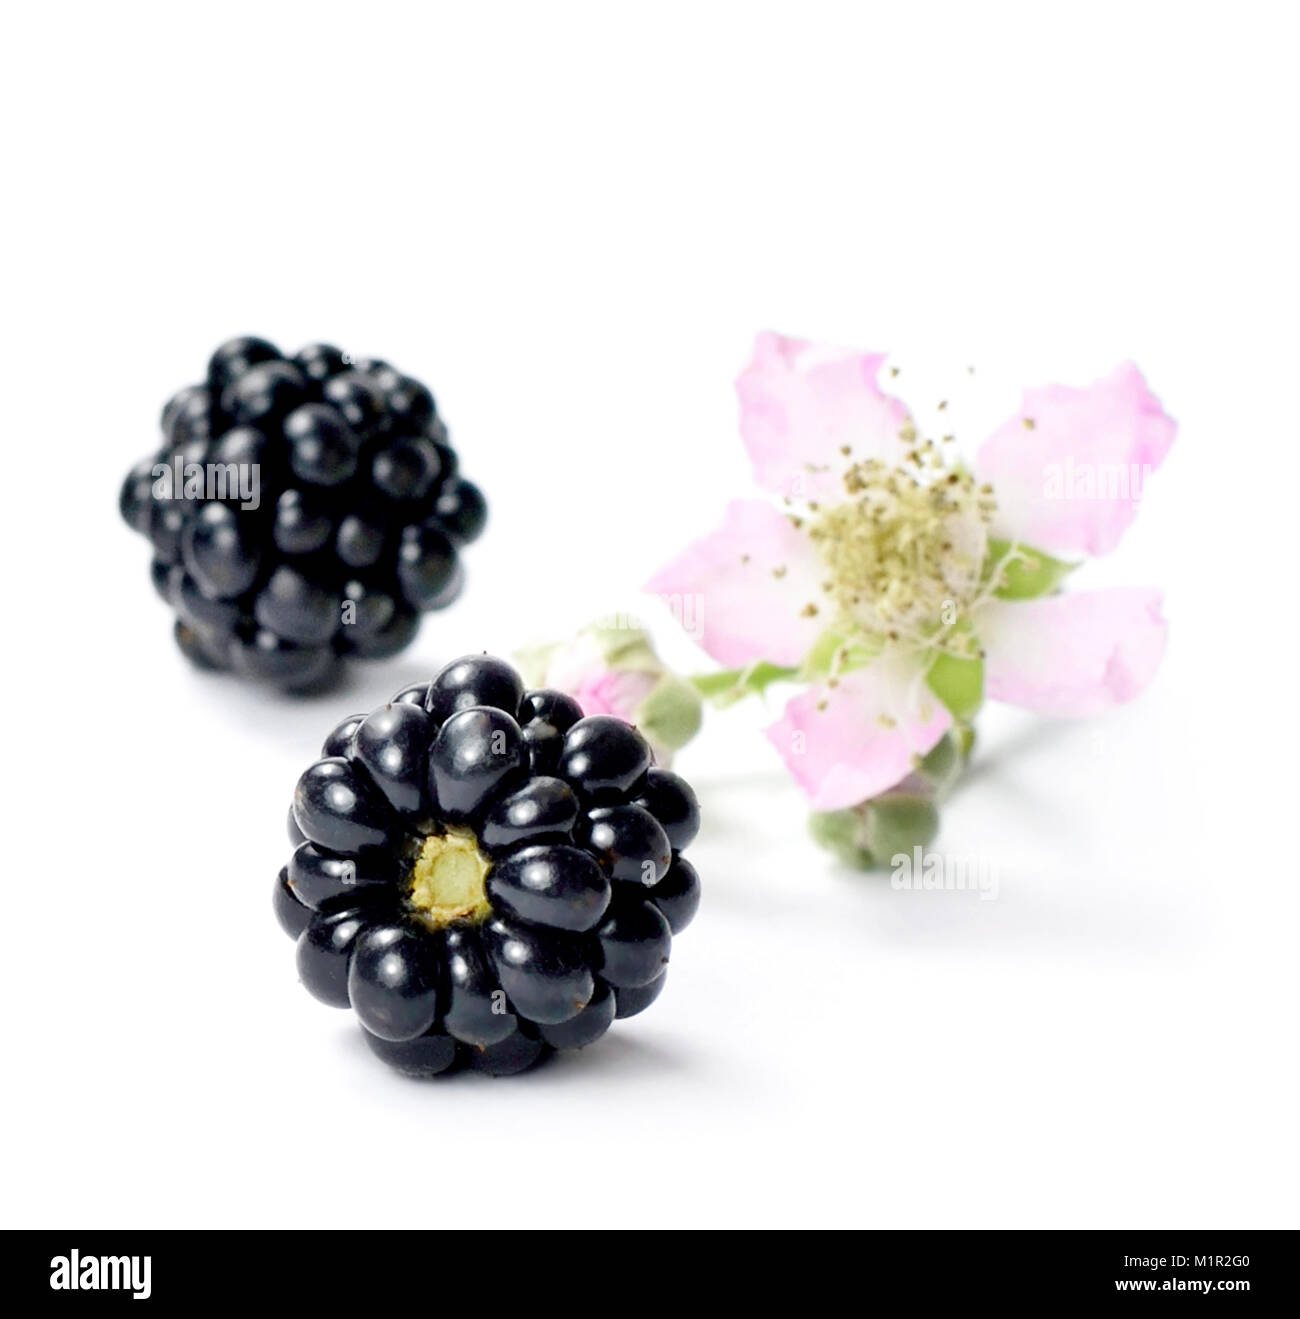 Fresh blackberries and blackberry flower, isolated on white background. Fresh fruits or forest fruit scene. Healthy eating. Stock Photo